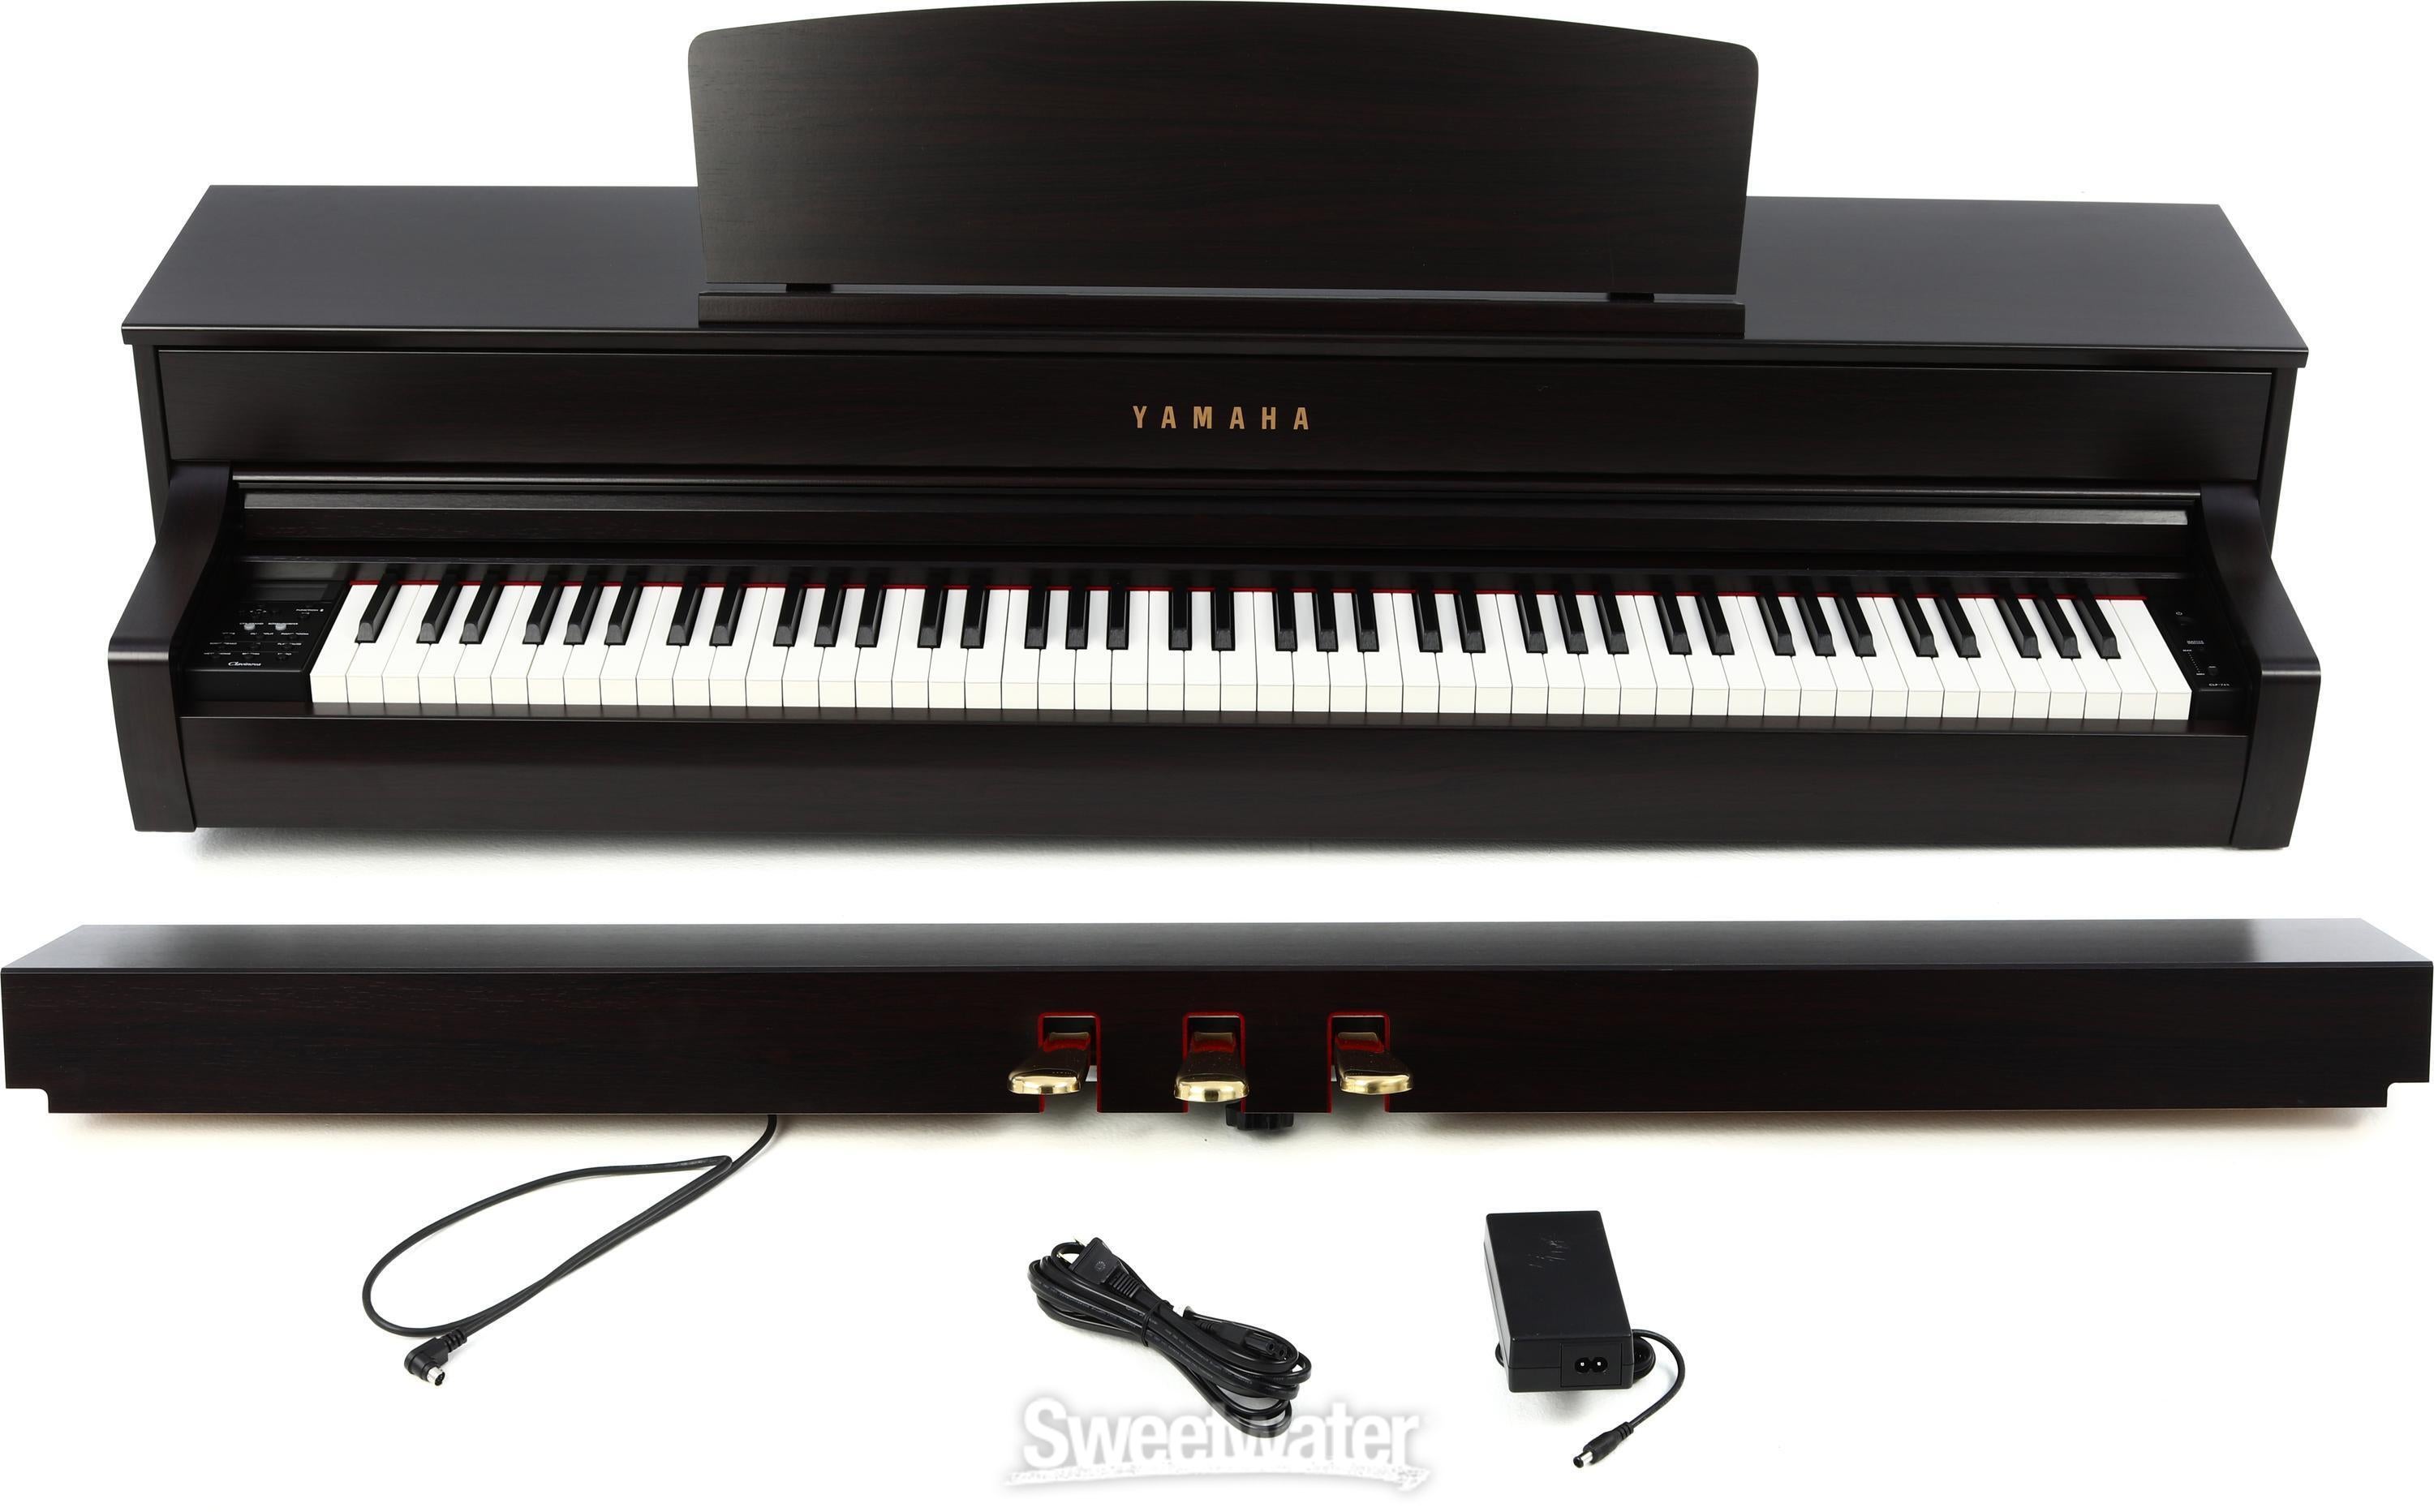 Yamaha Clavinova CLP-745 Digital Upright Piano with Bench - Rosewood Finish